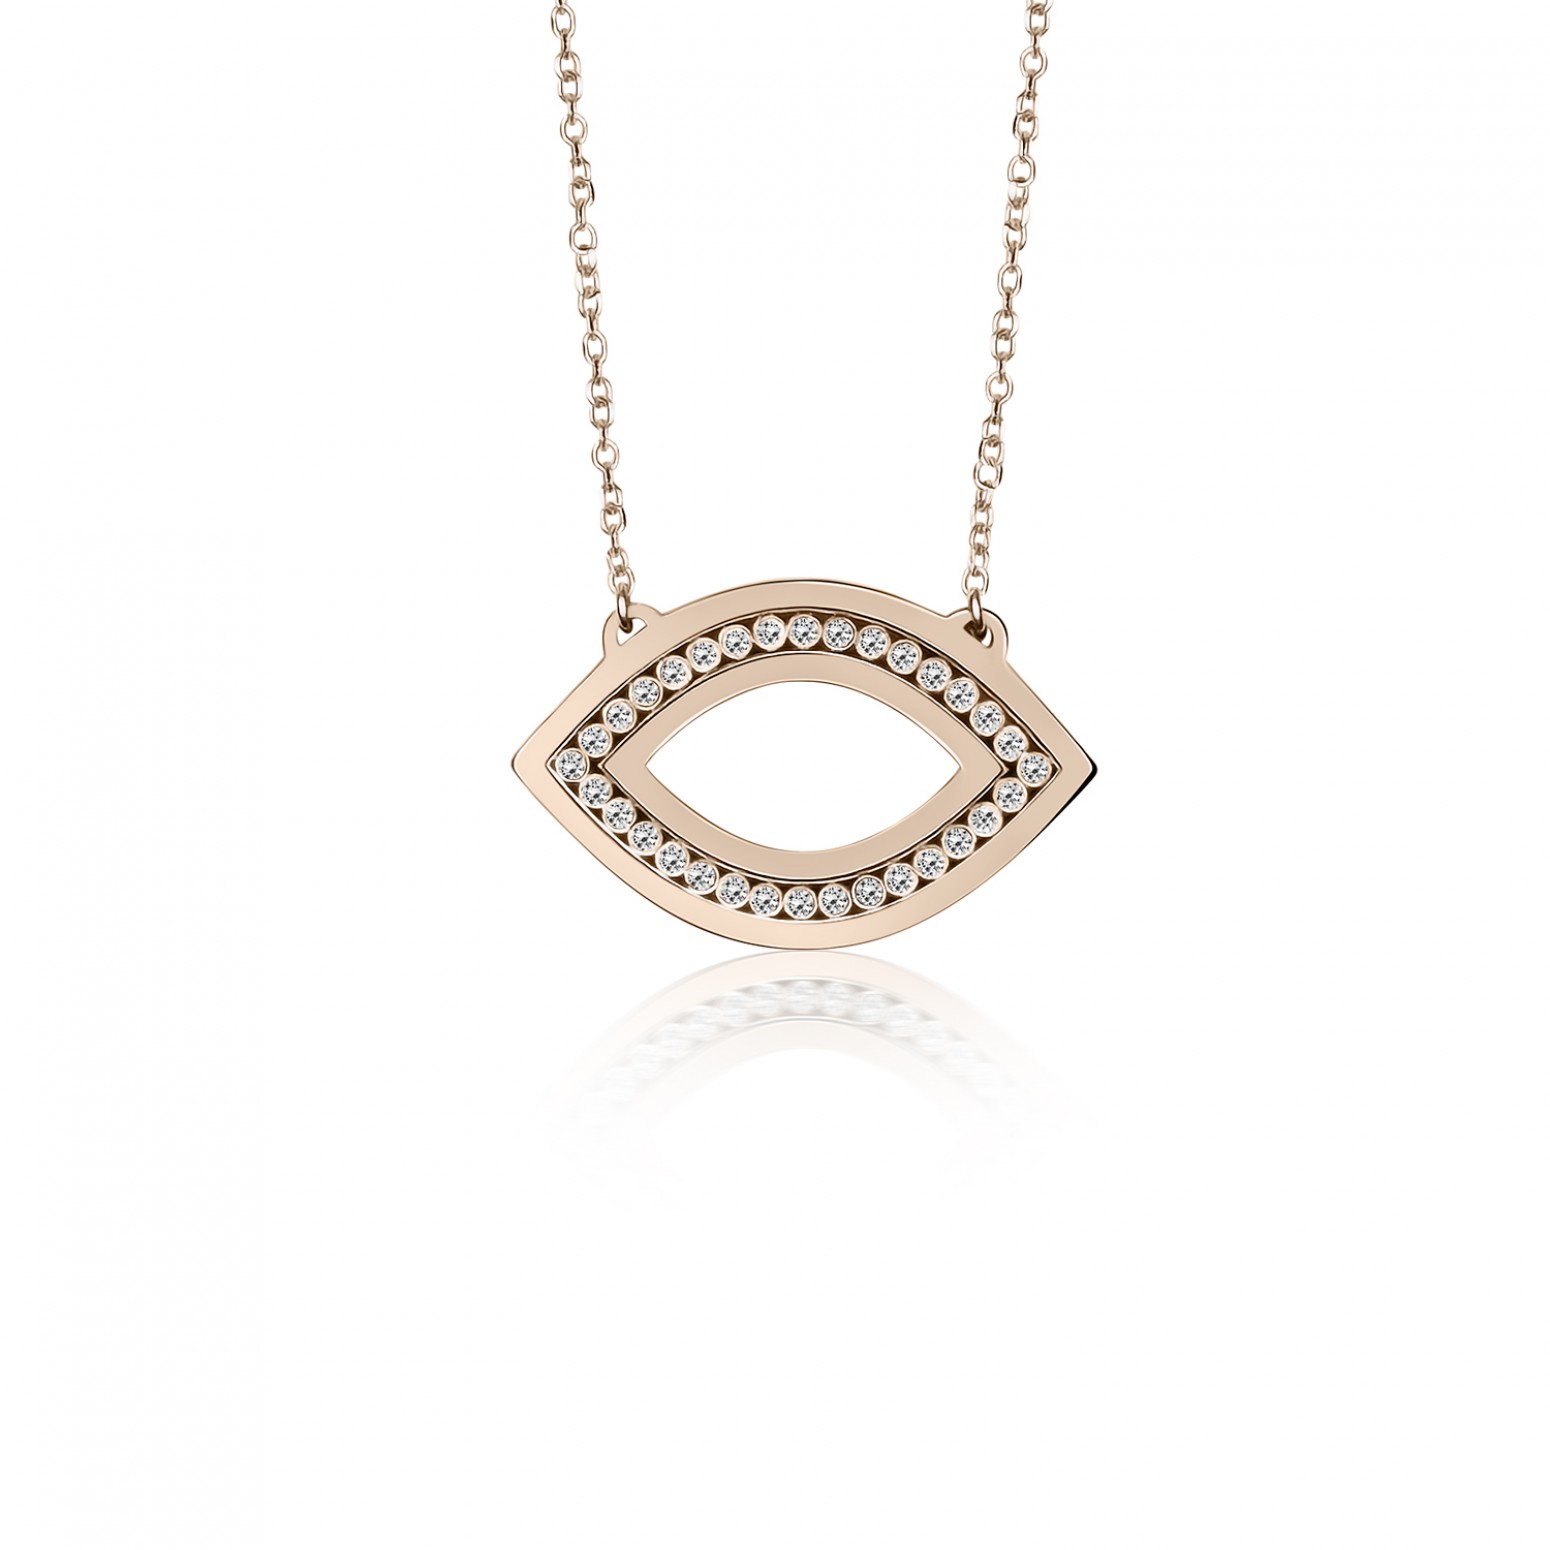 Bar necklace, Κ14 pink gold with diamonds 0.09ct, VS1, H ko4064 NECKLACES Κοσμηματα - chrilia.gr